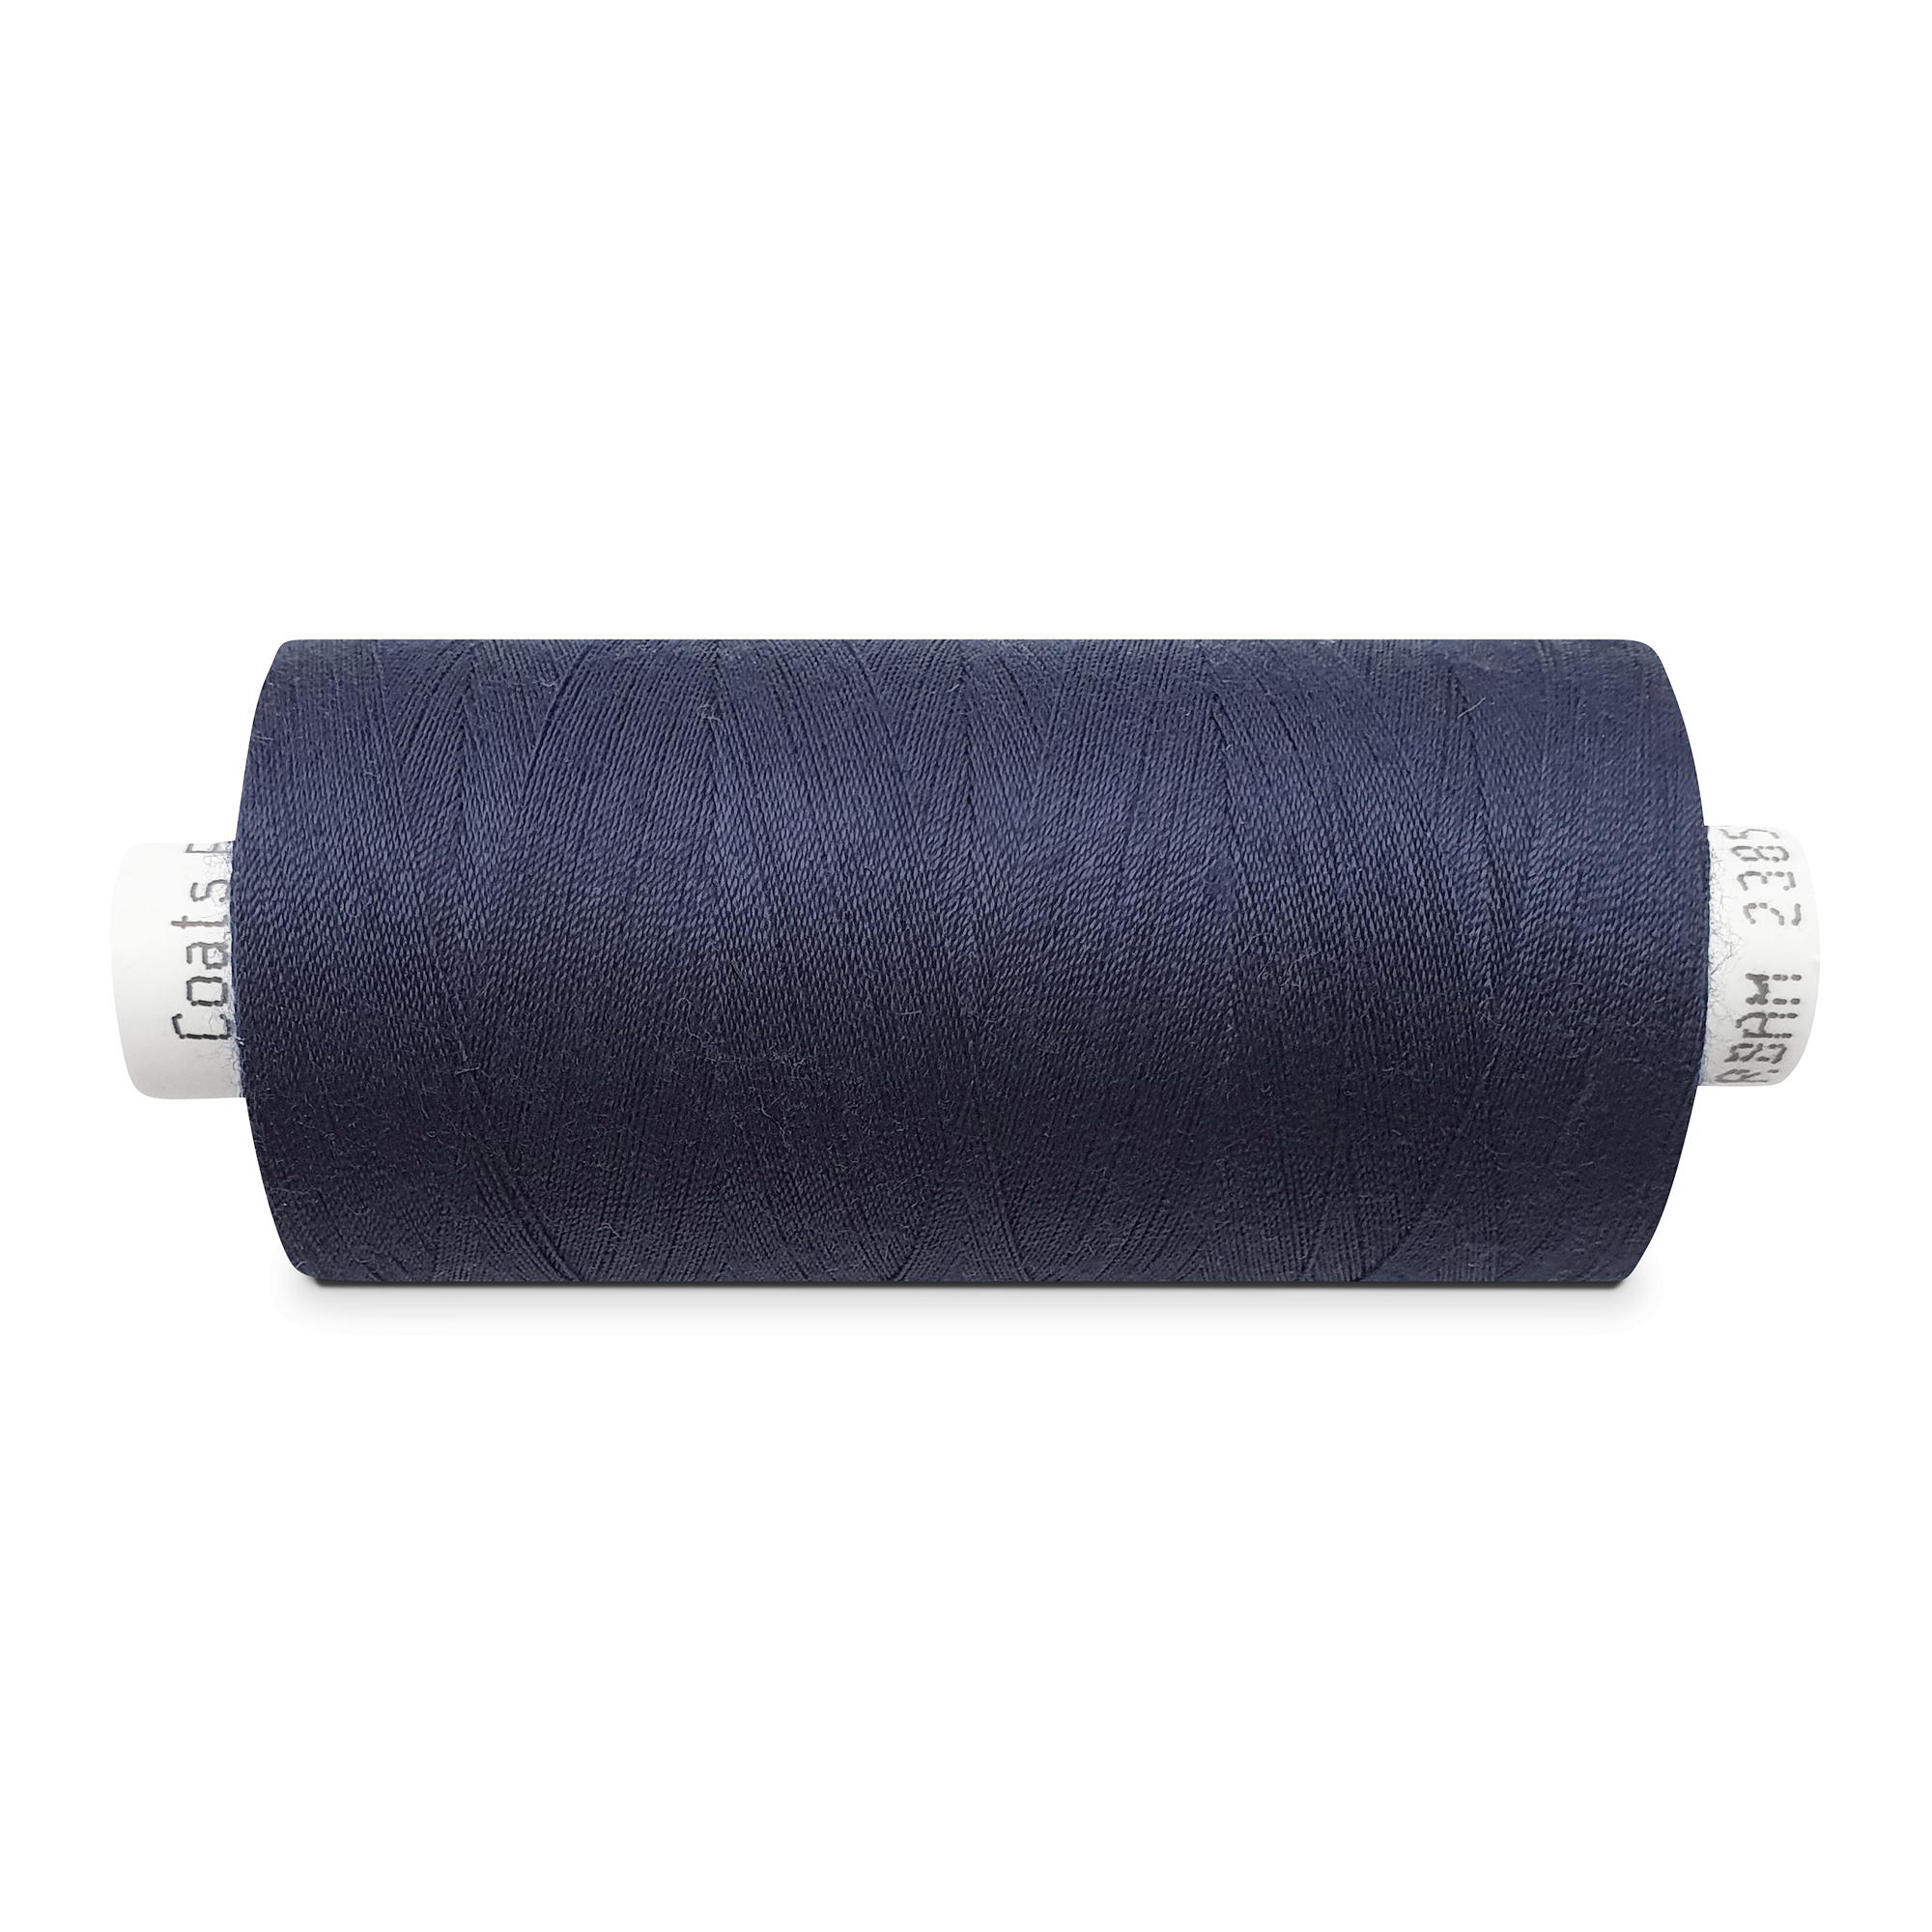 Leather/Sewing thread matt black blue